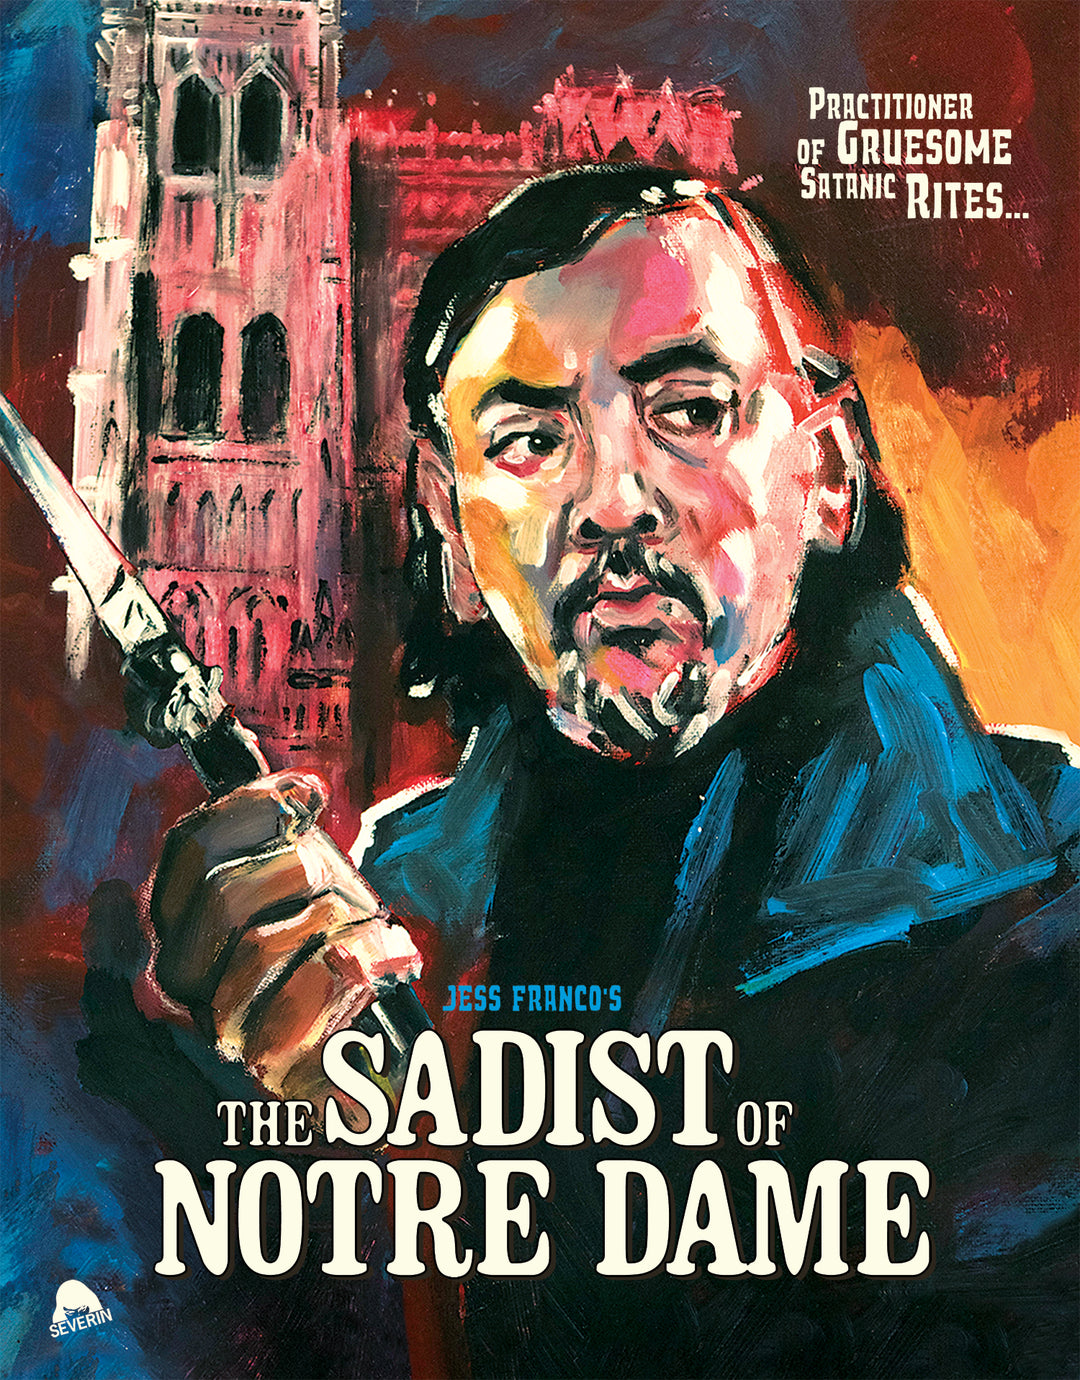 Jess Franco's The Sadist of Notre Dame